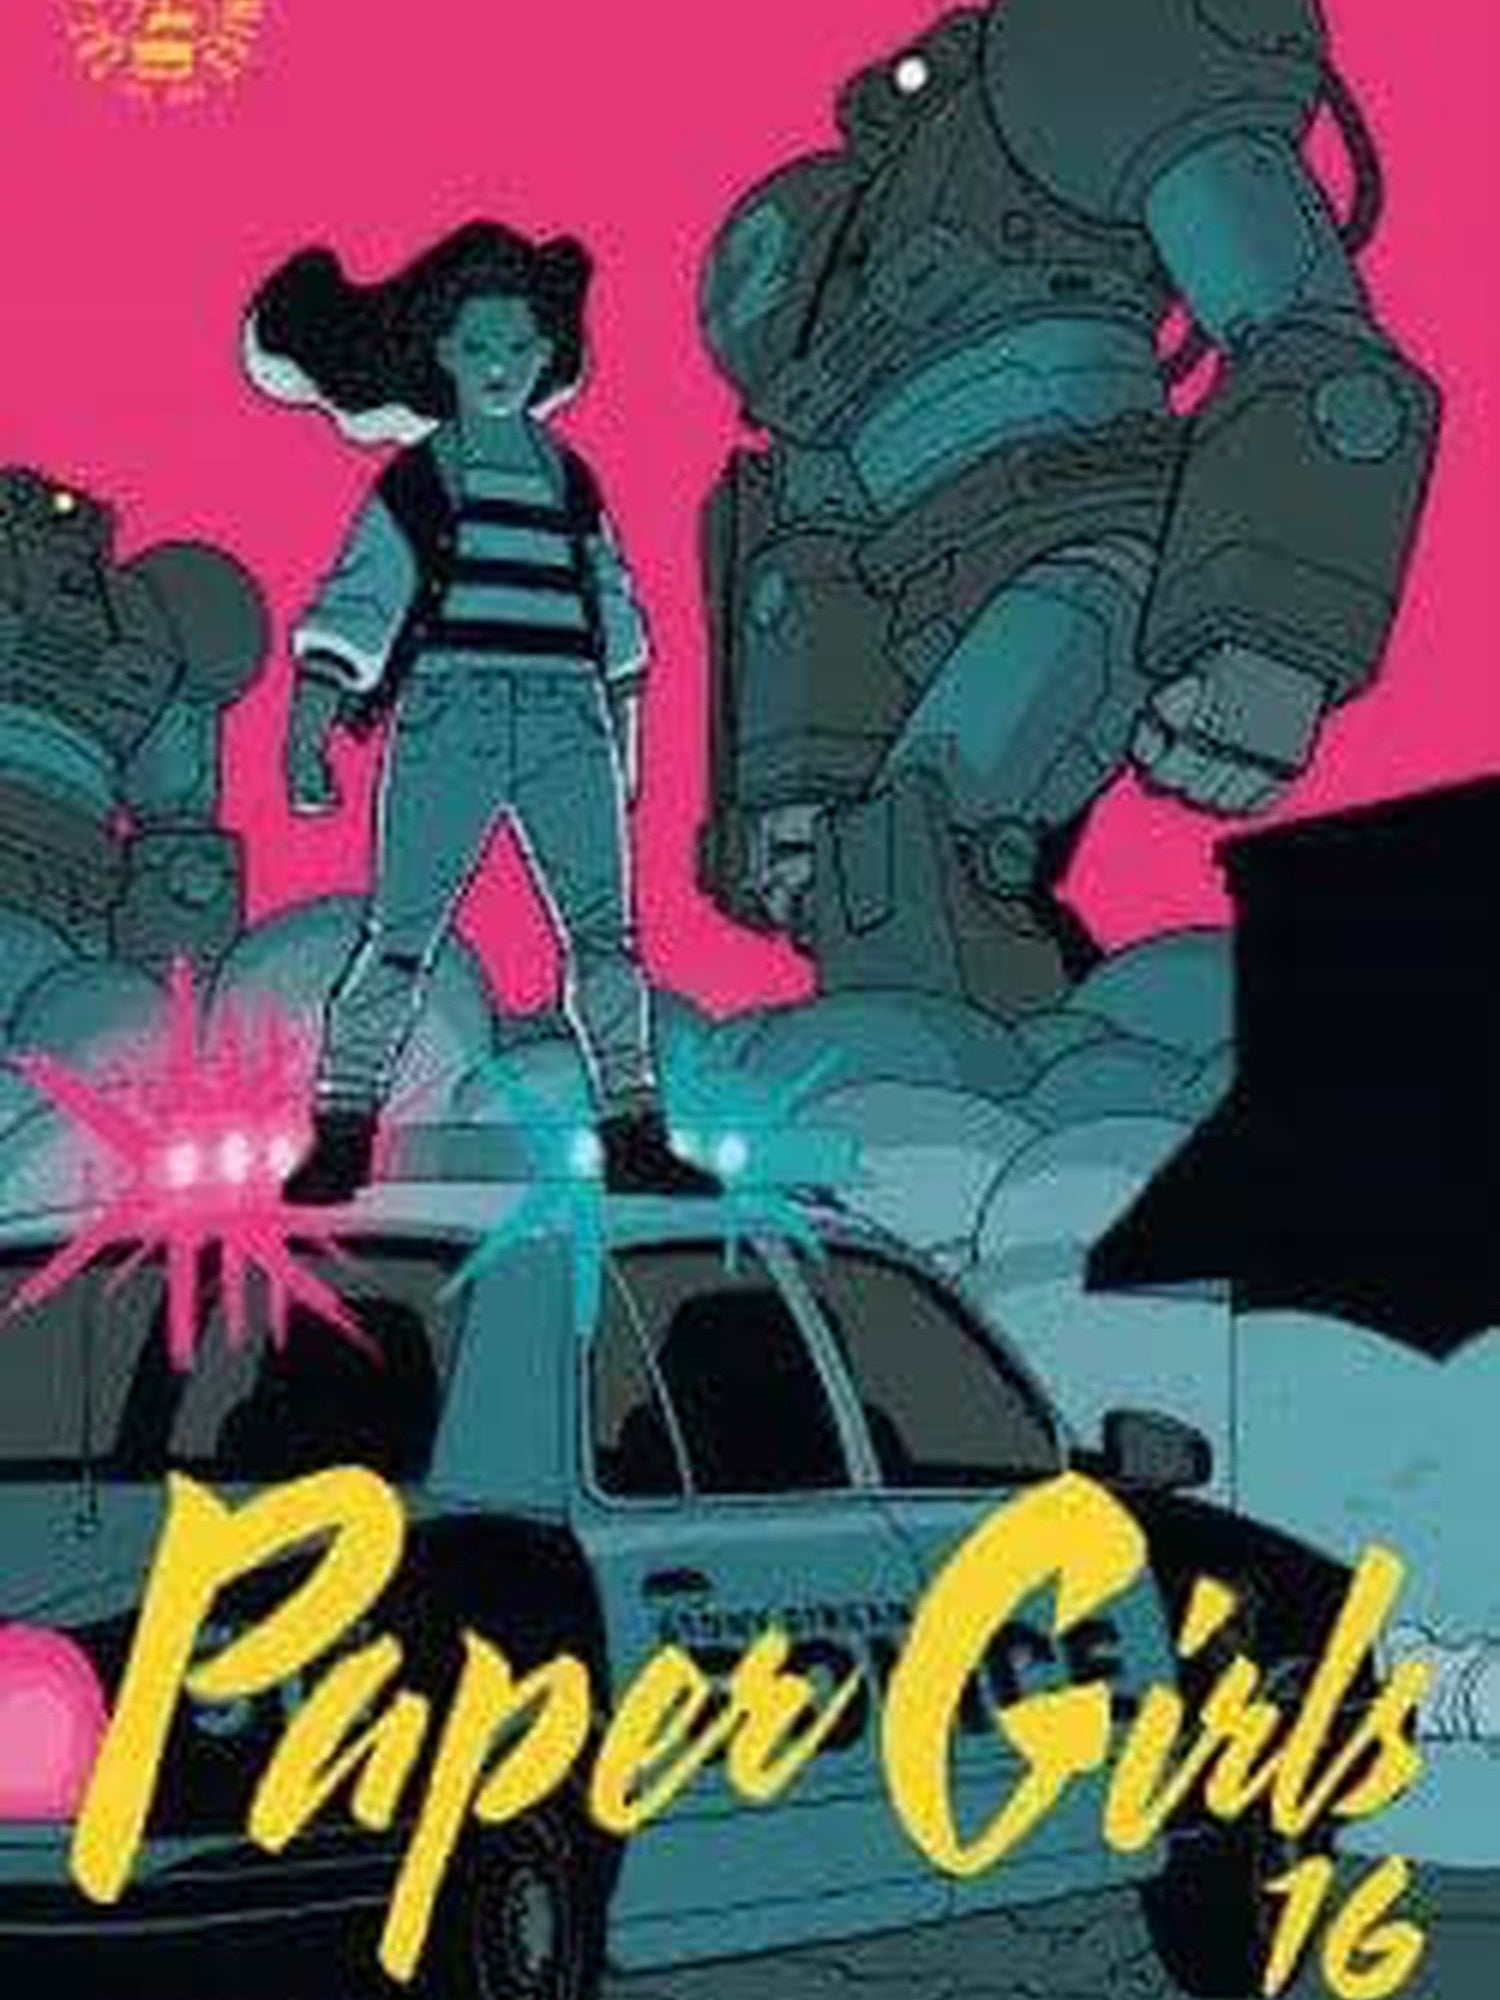 Paper Girls #16 Planeta ENcuadrocomics